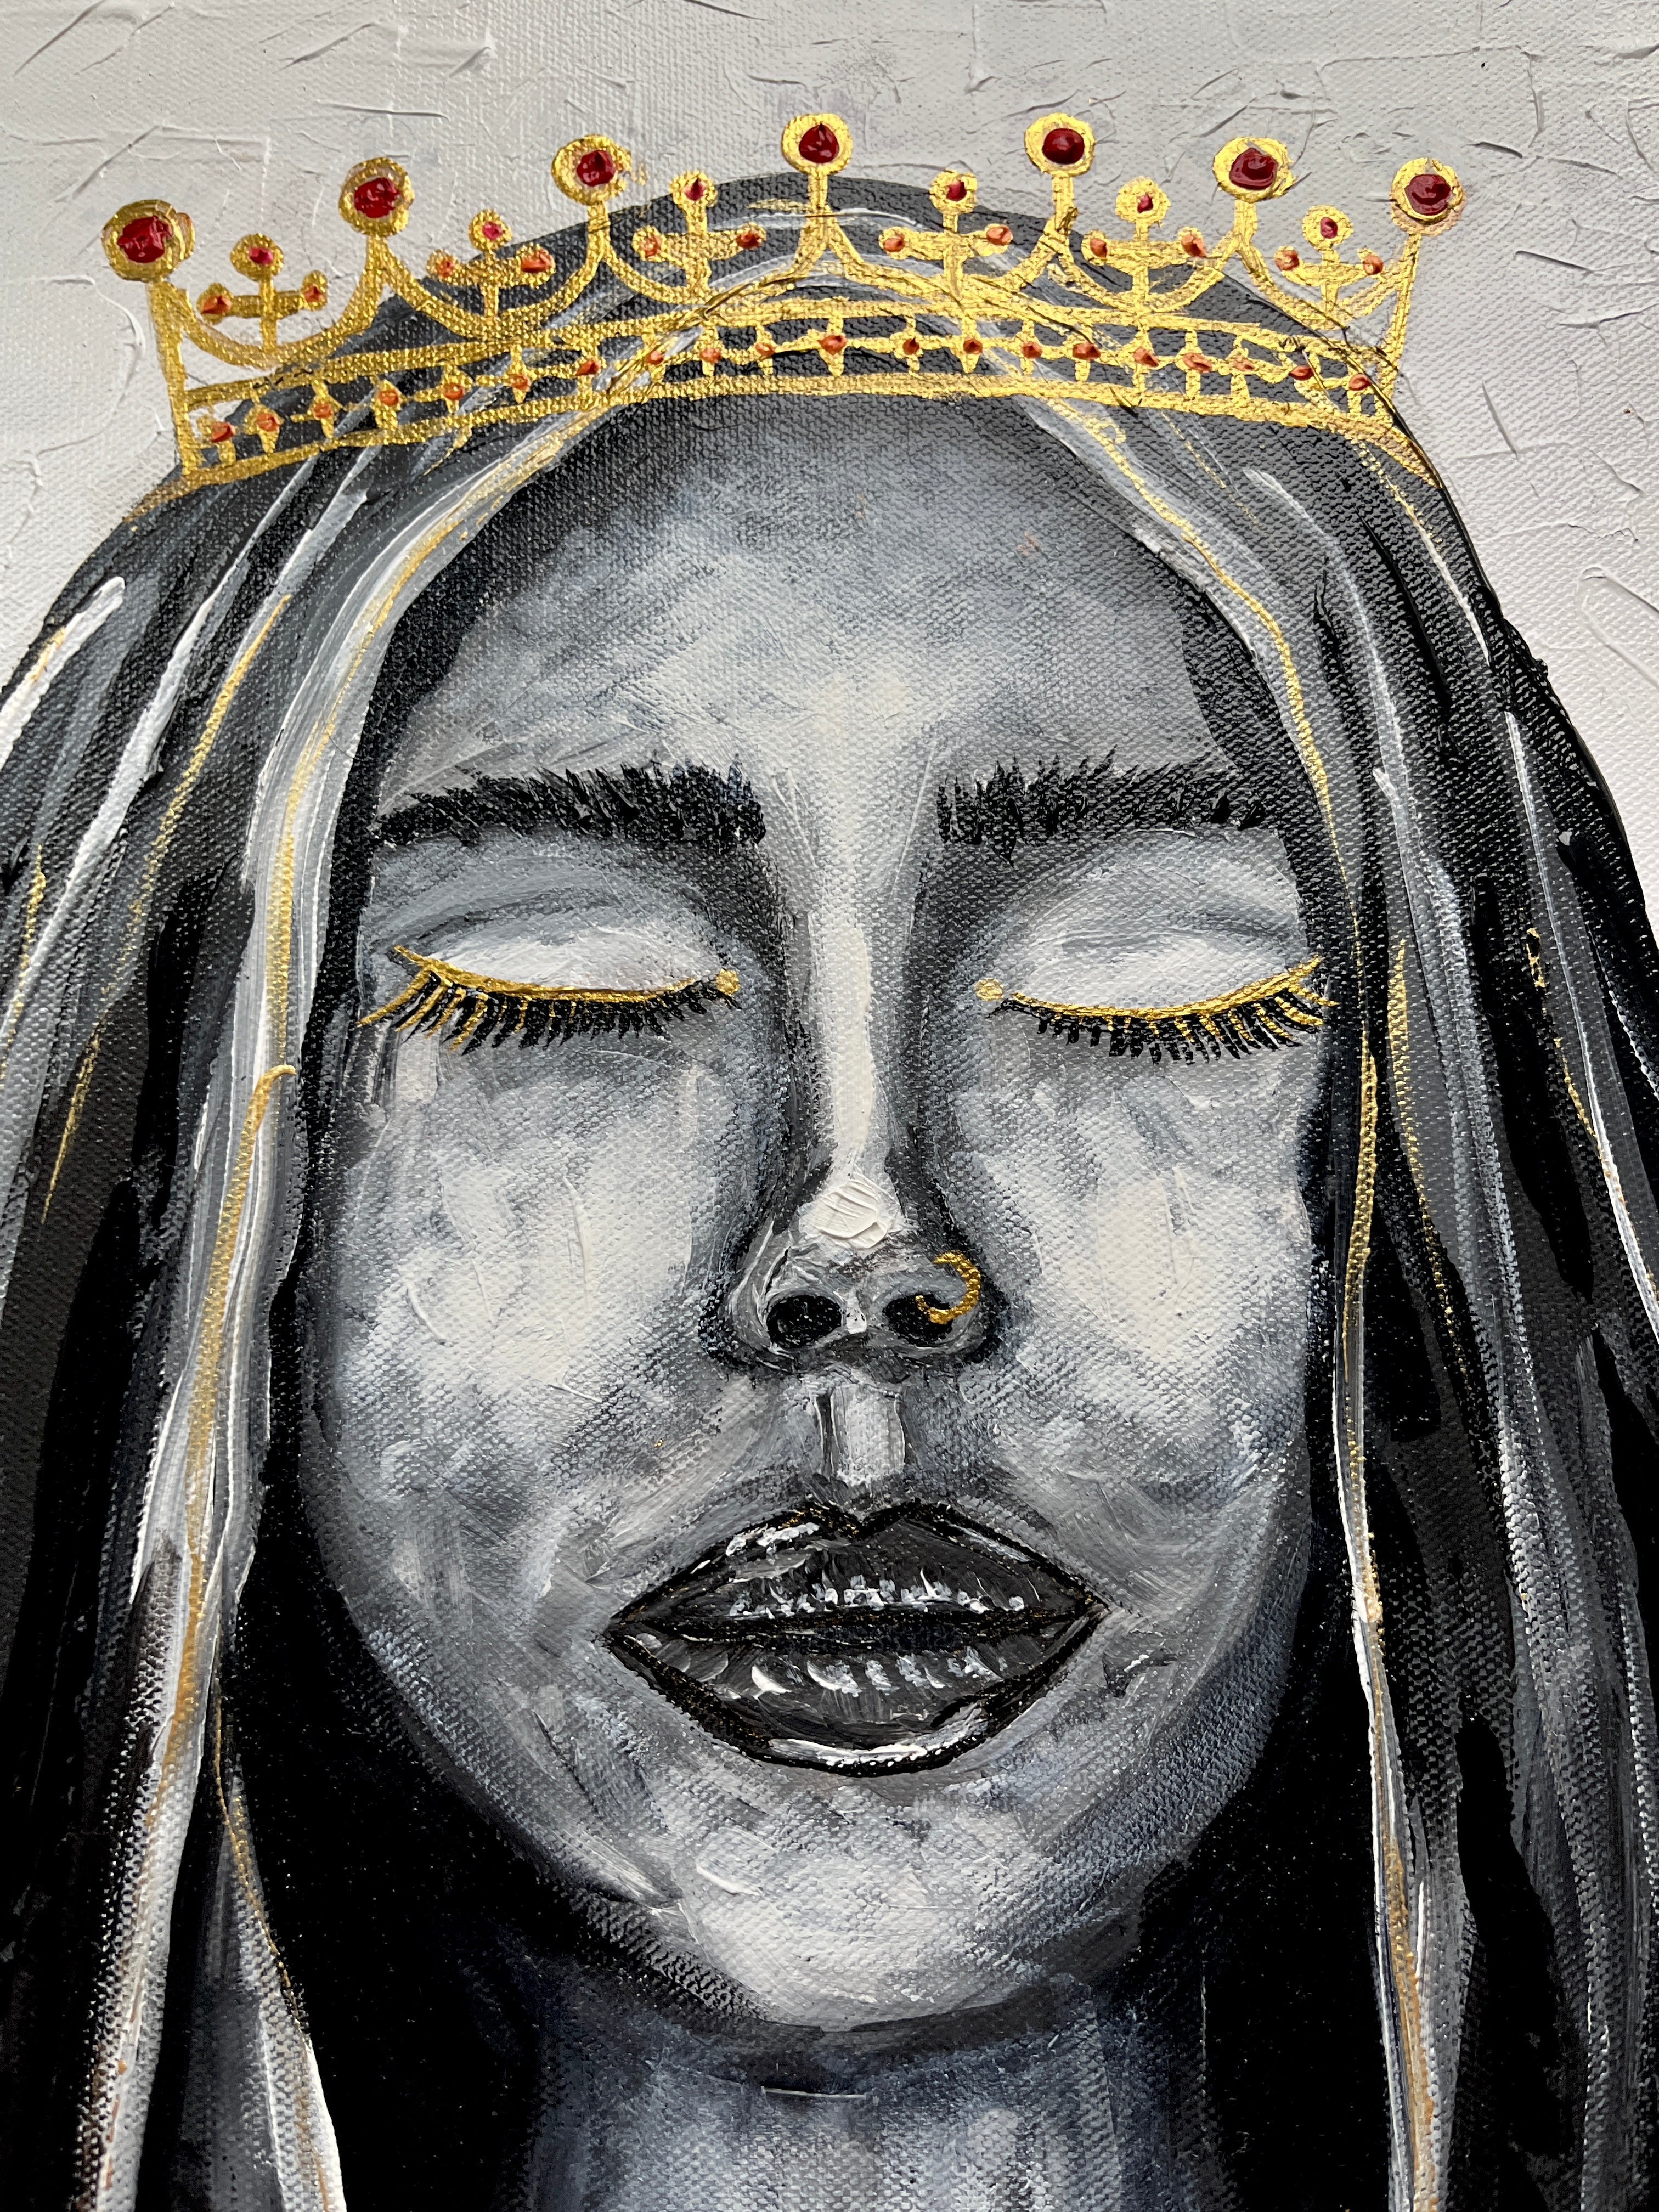 Queen | Original Artwork